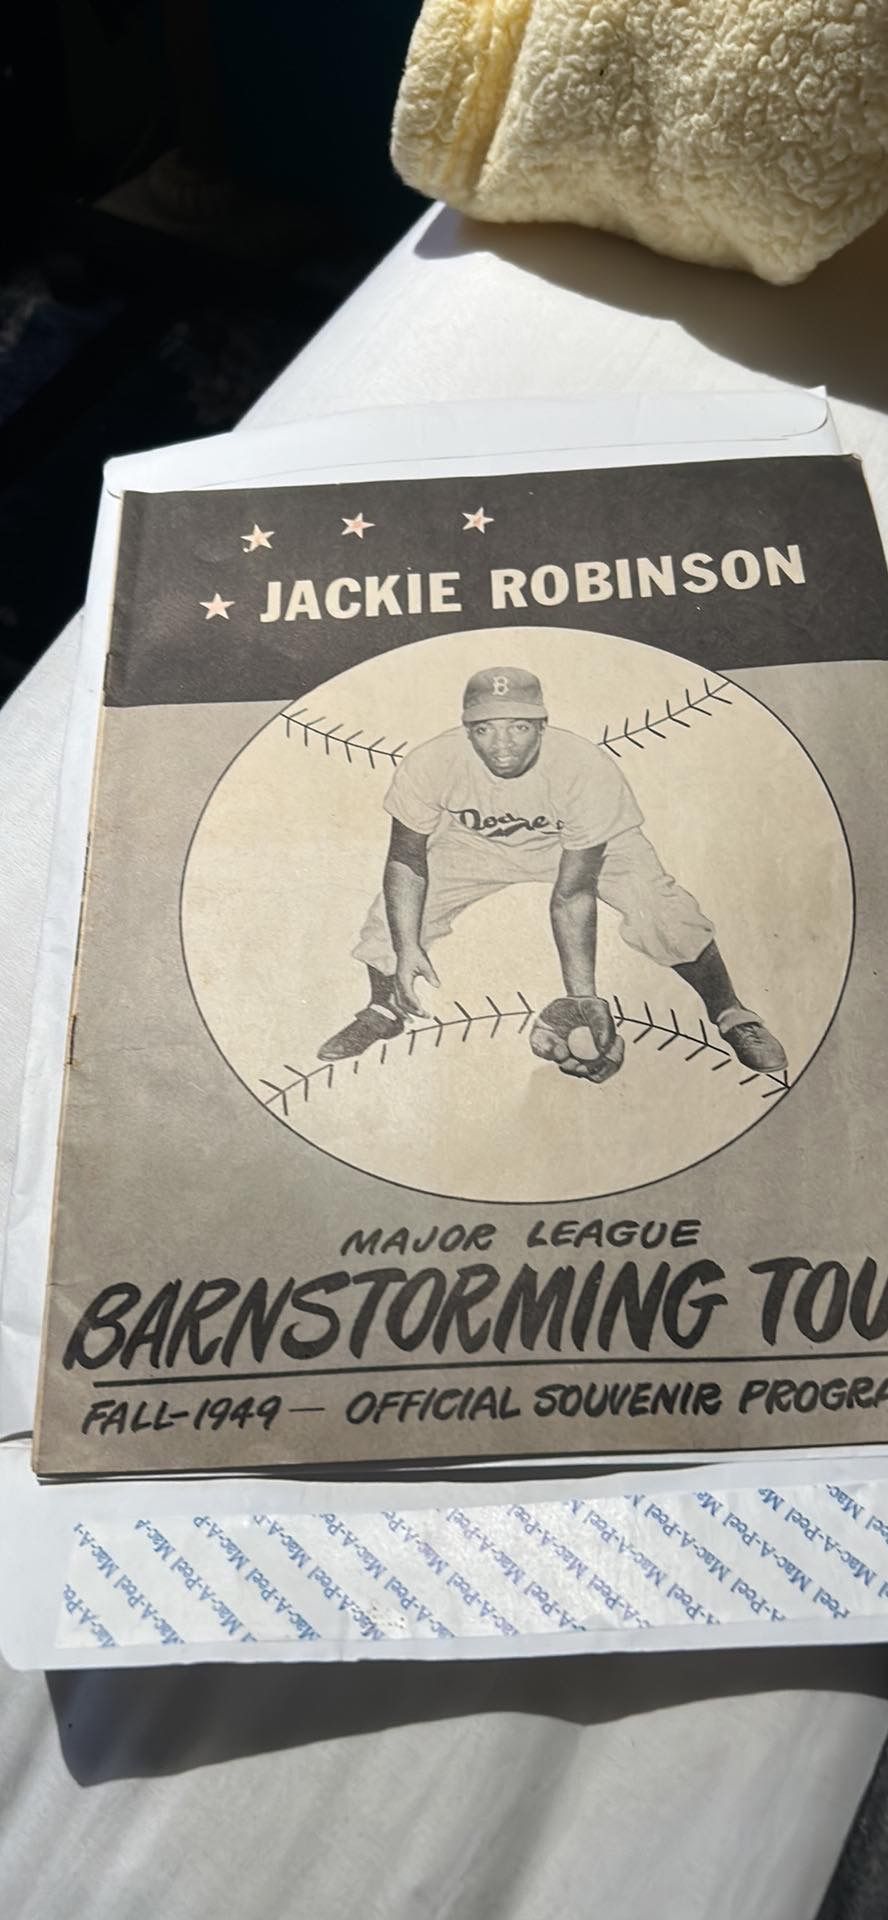 Jackie Robinson 1939 Score Sheet